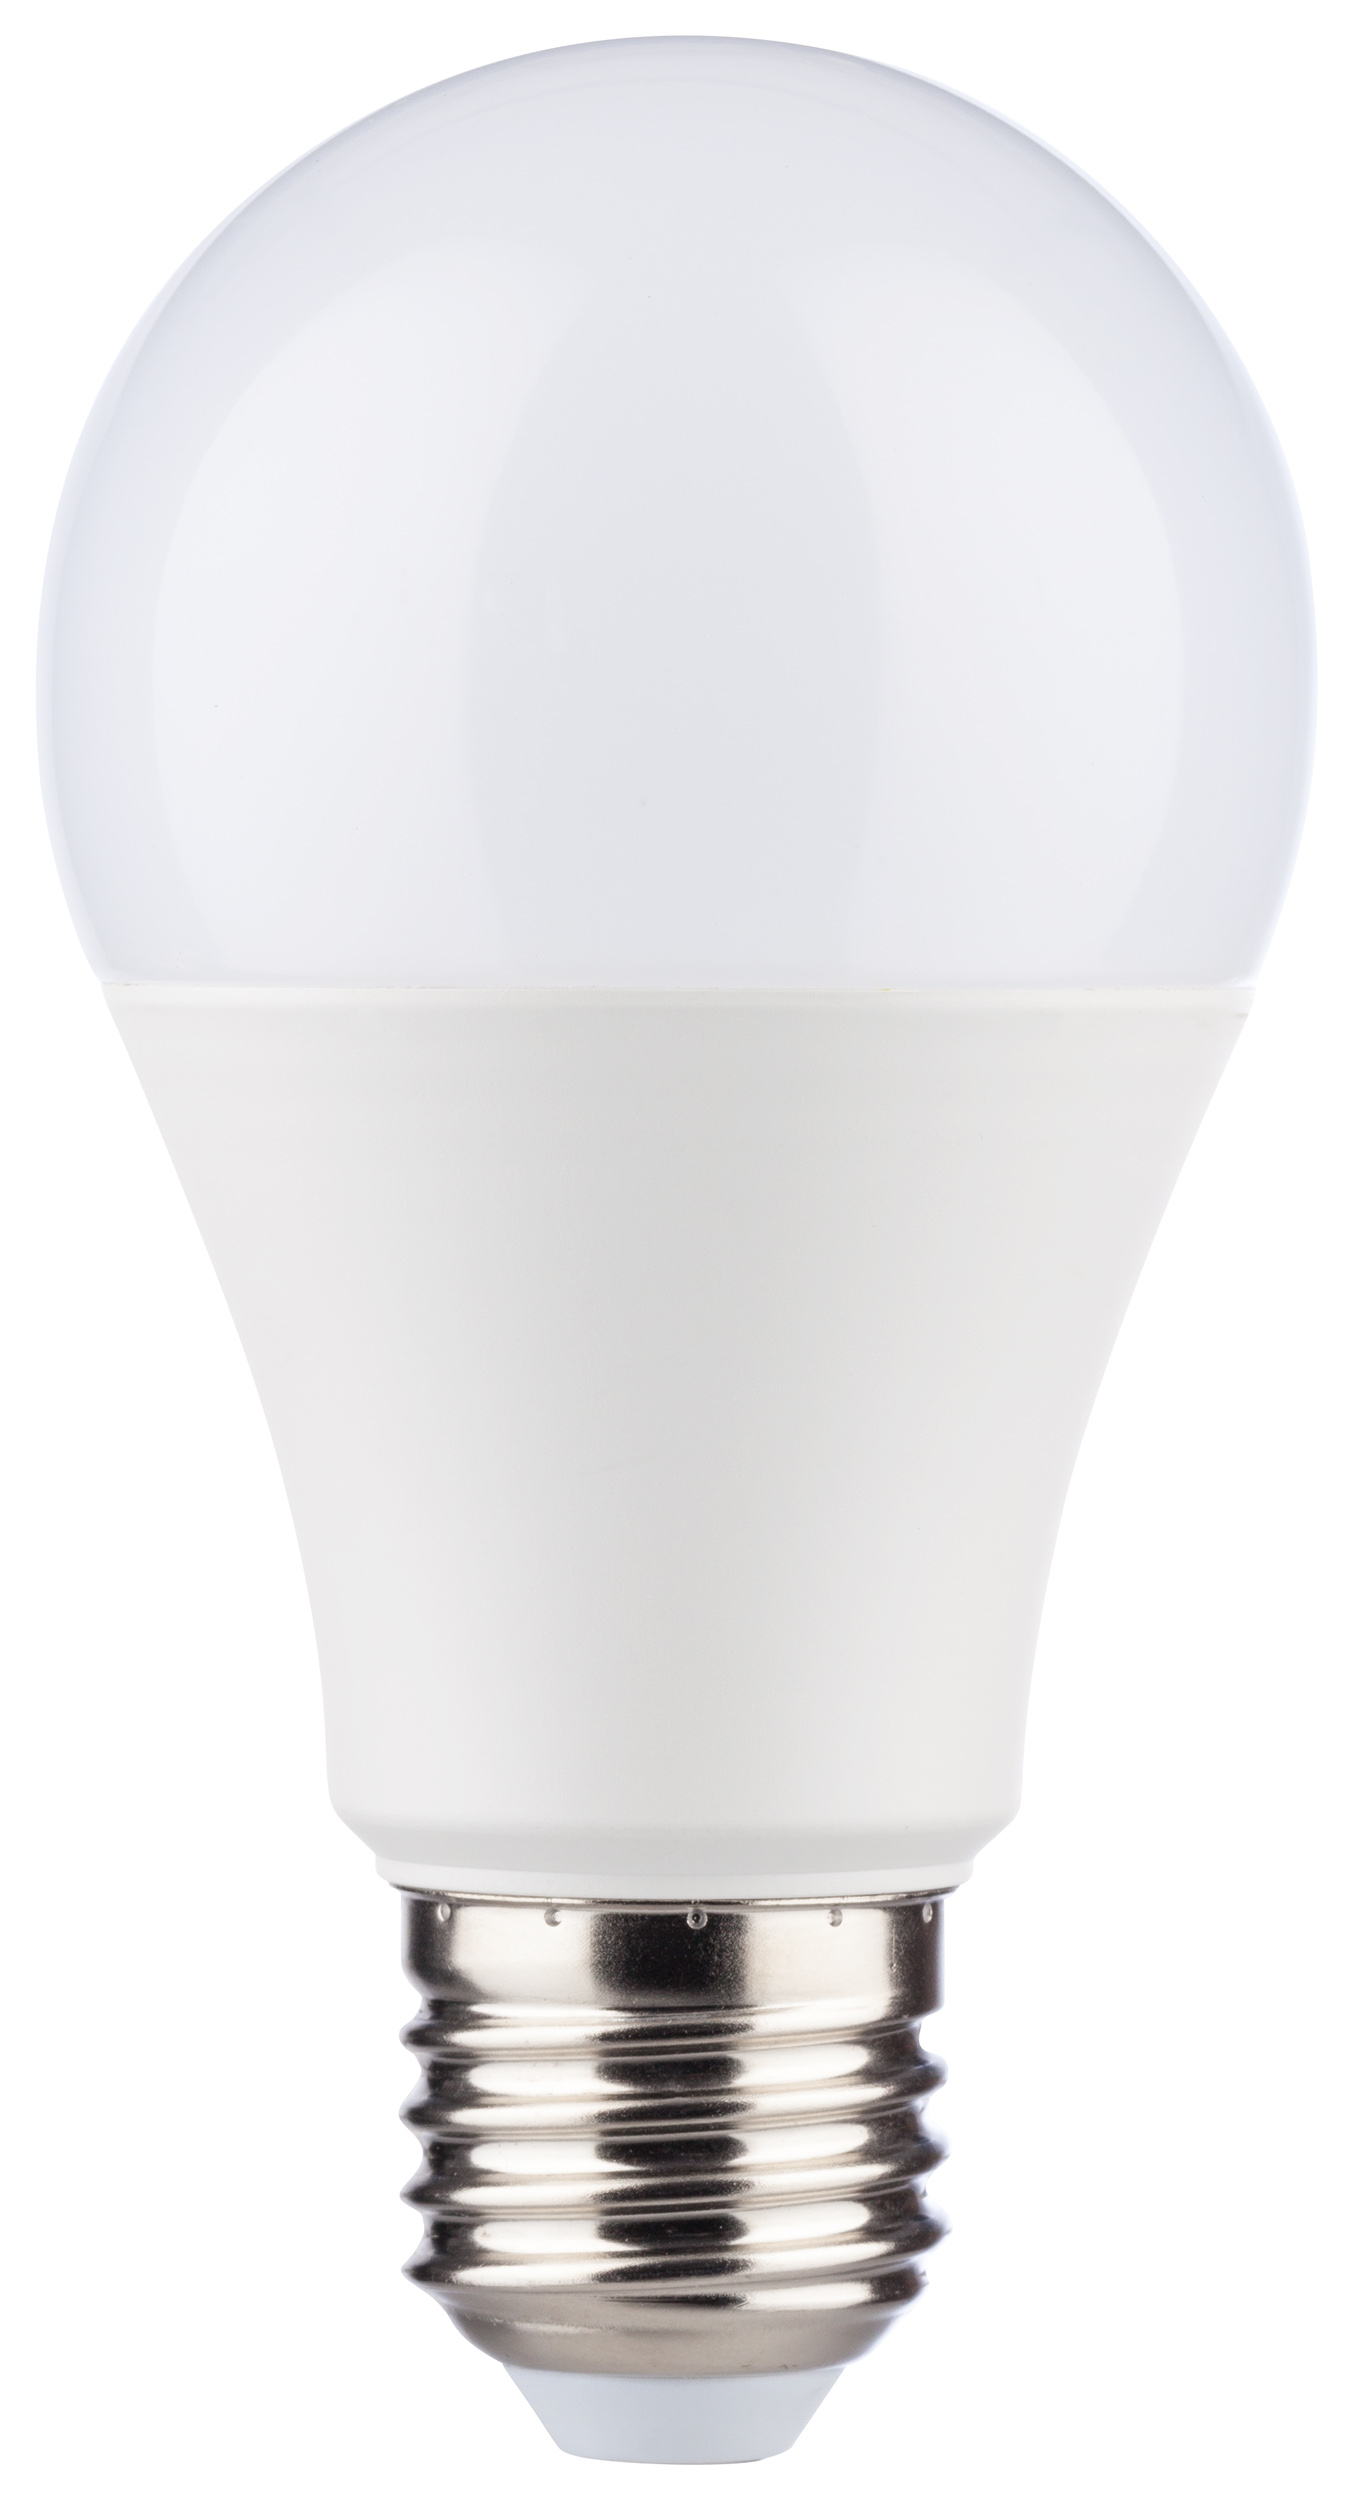 LED-Leuchte, 12V / 1,7 Watt, 305mm, Warmweiß